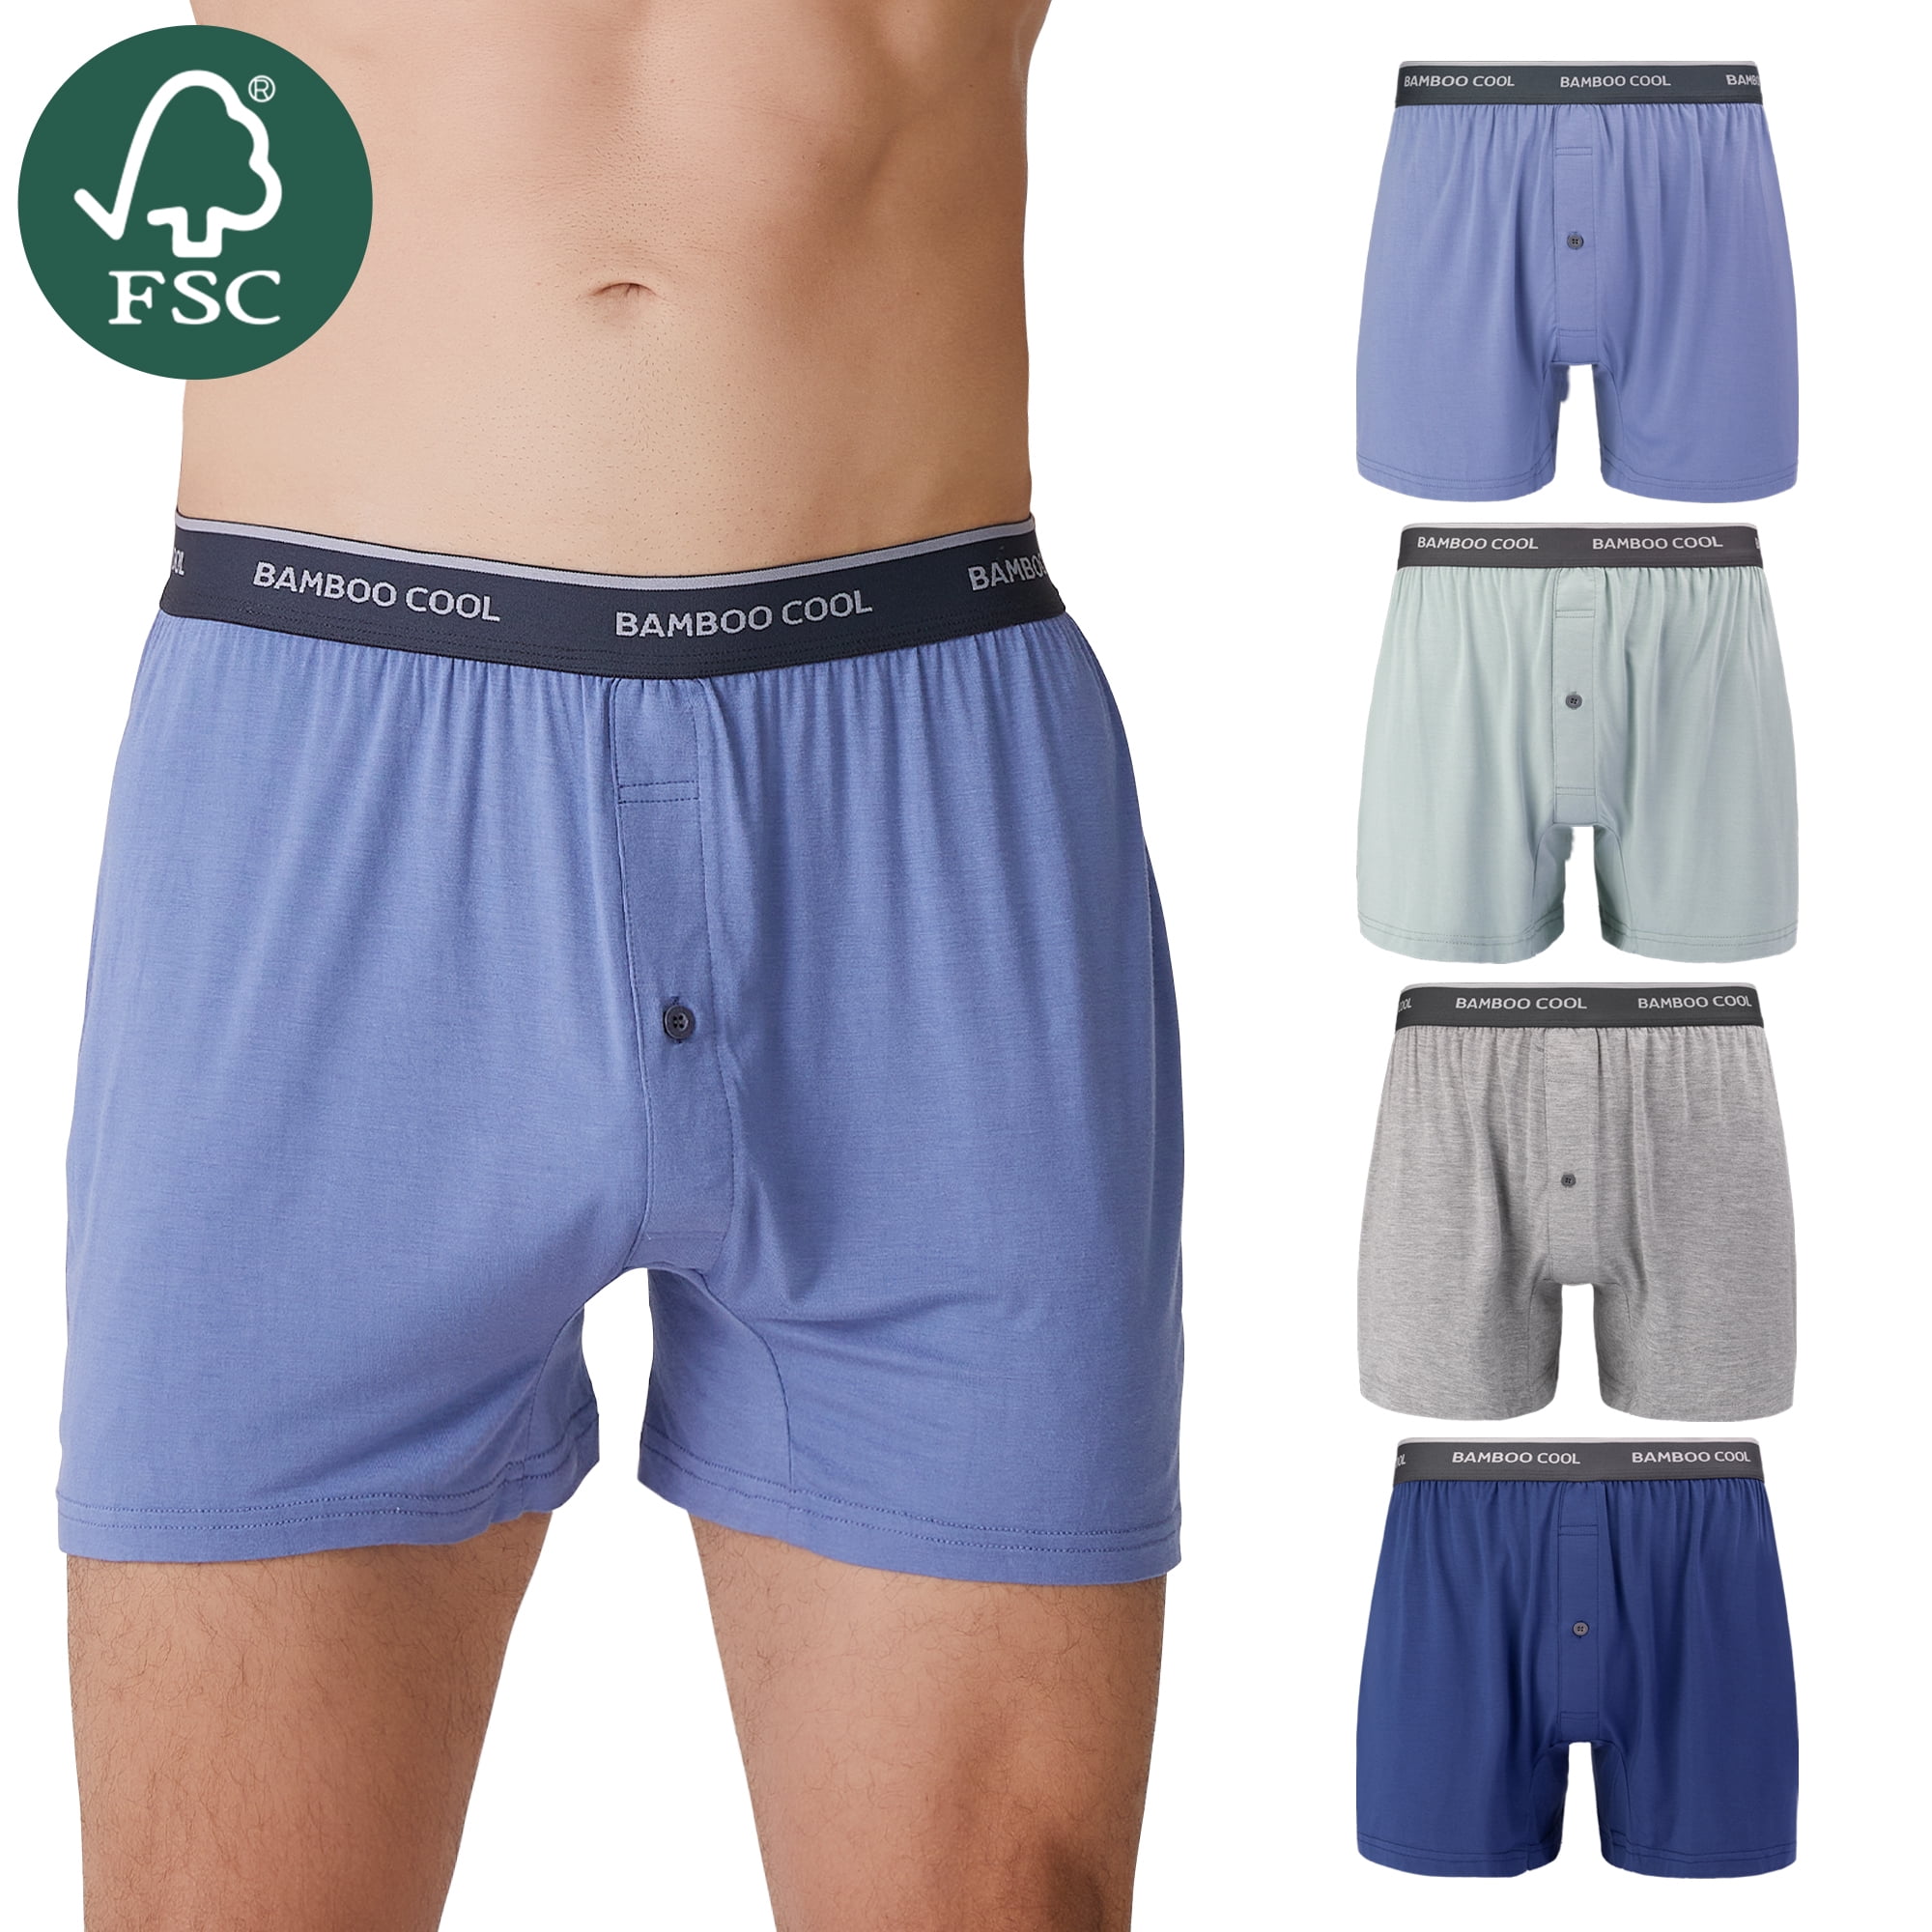 Bamboo Cool Men's Boxer Shorts,4 Pack Bamboo Boxers Underwear,Premium ...